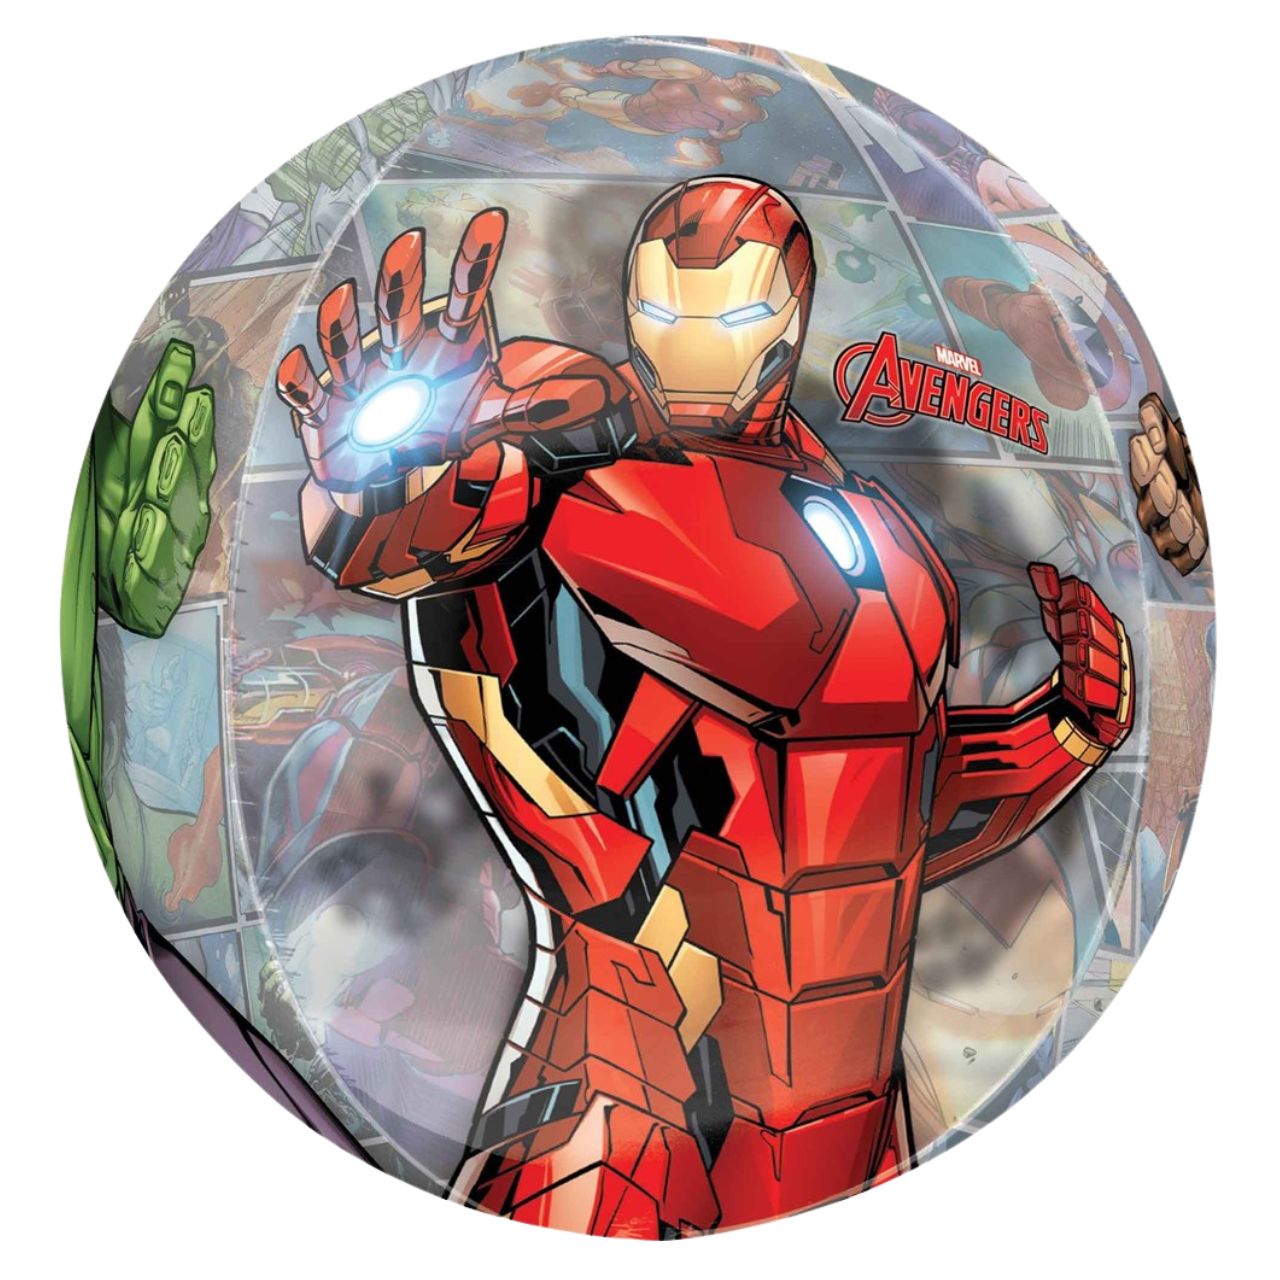 Avengers Powers Unite Clear Orbz Balloon